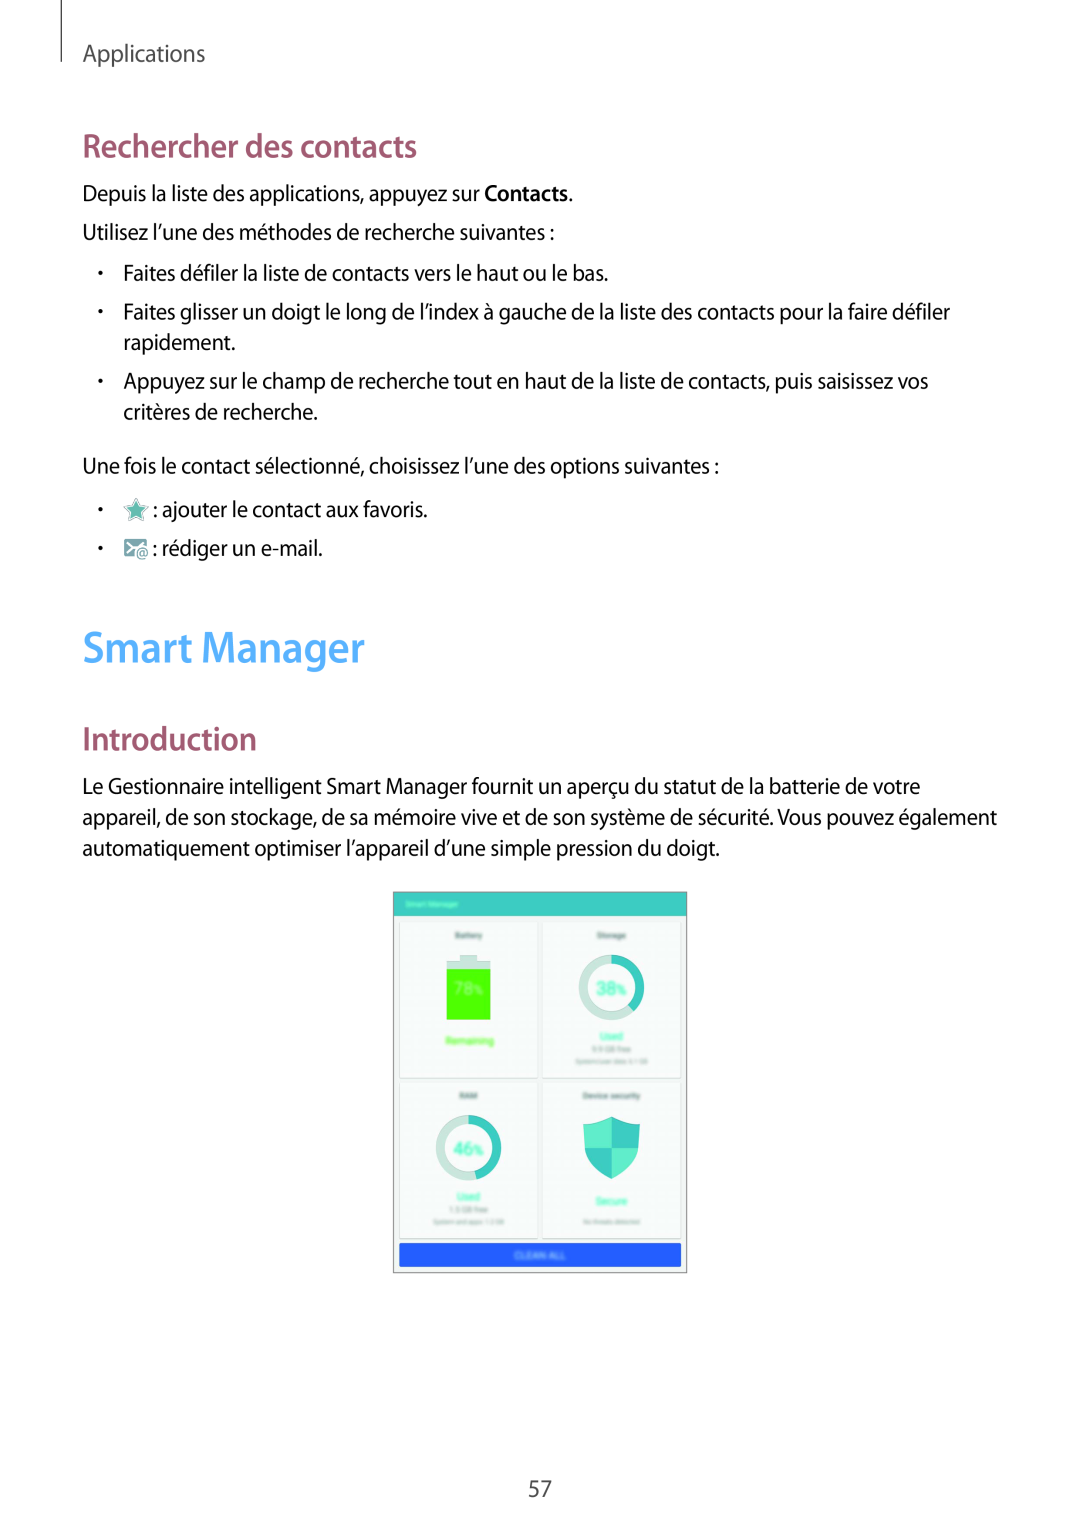 Samsung SM-T810NZKEXEF, SM-T810NZDEXEF, SM-T810NZWEXEF Smart Manager, Rechercher des contacts, Introduction, Applications 